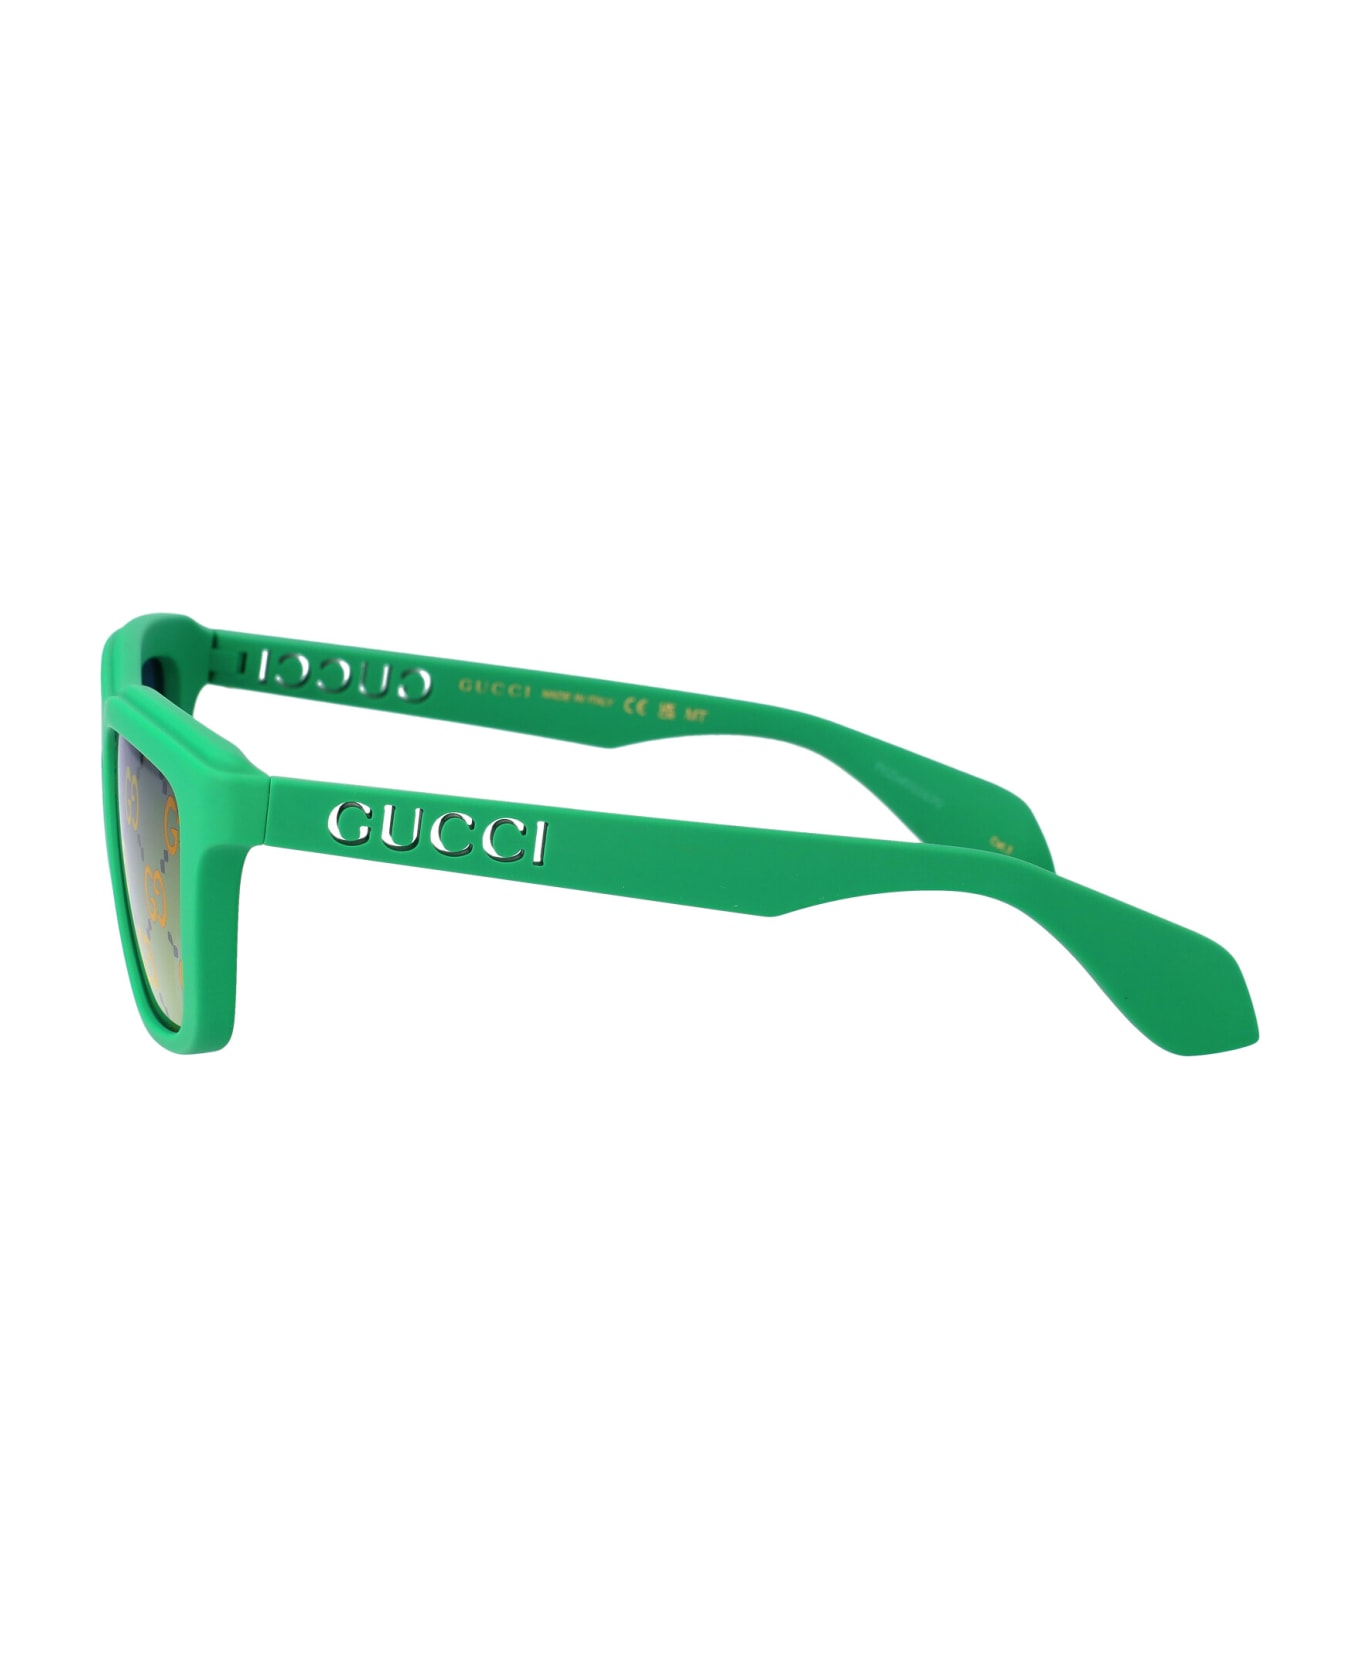 Gucci Eyewear Gg1571s Sunglasses - 004 GREEN GREEN BLUE